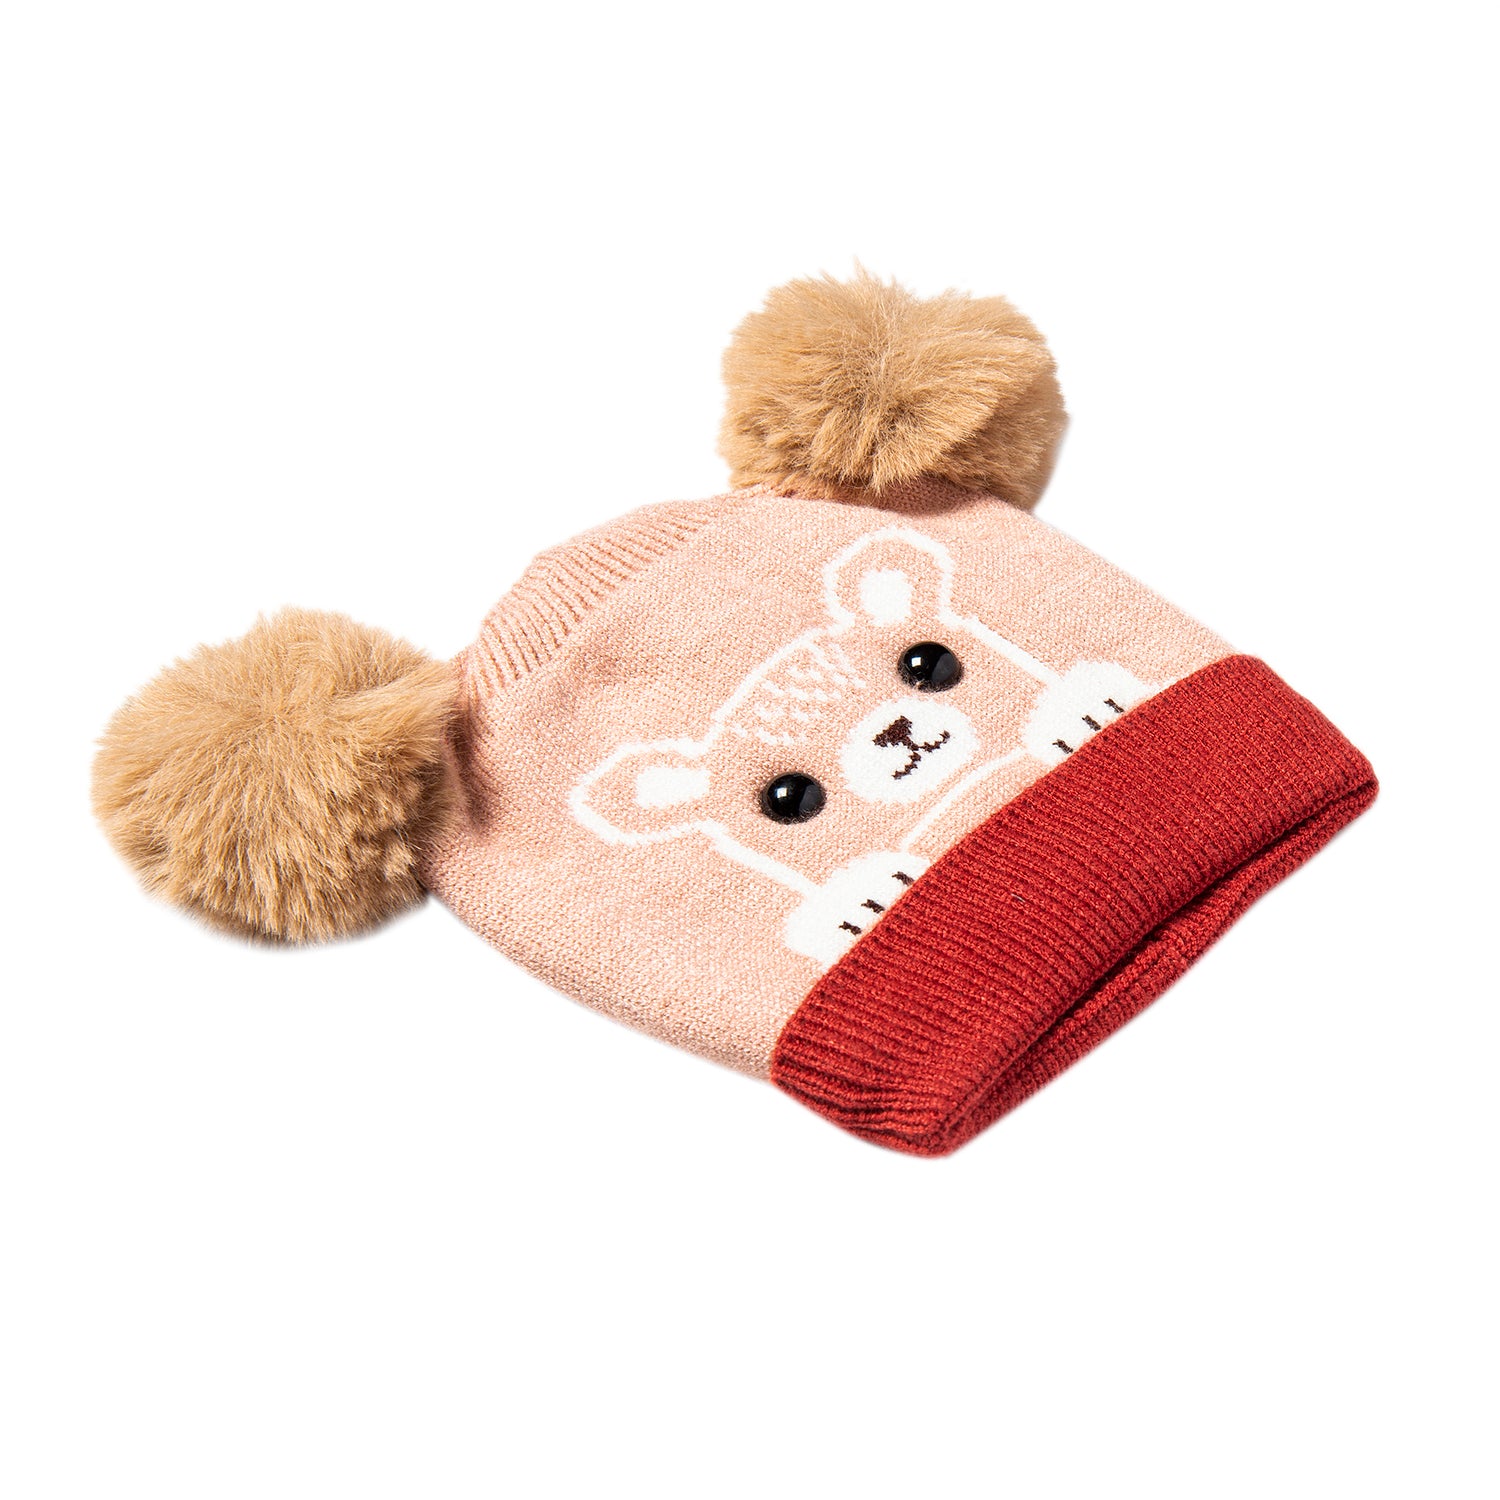 Knit Woollen Cap Pom Pom Bear Peach - Baby Moo